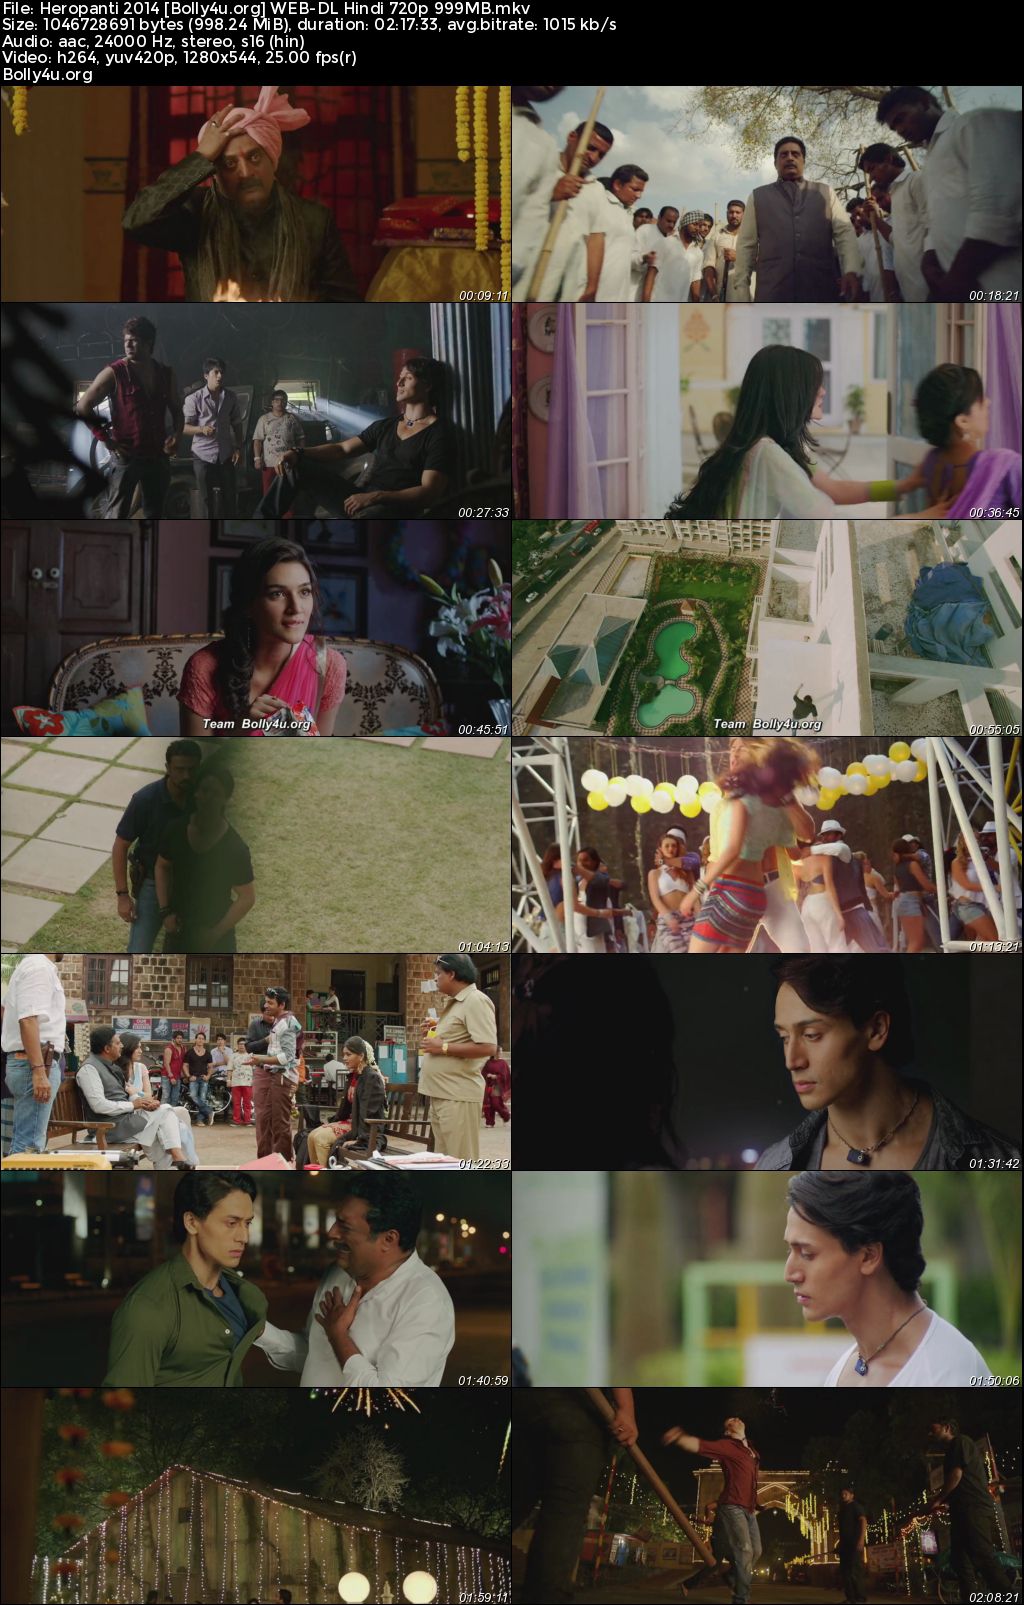 Heropanti 2014 WEB-DL Hindi Full Movie Download 1080p 720p 480p